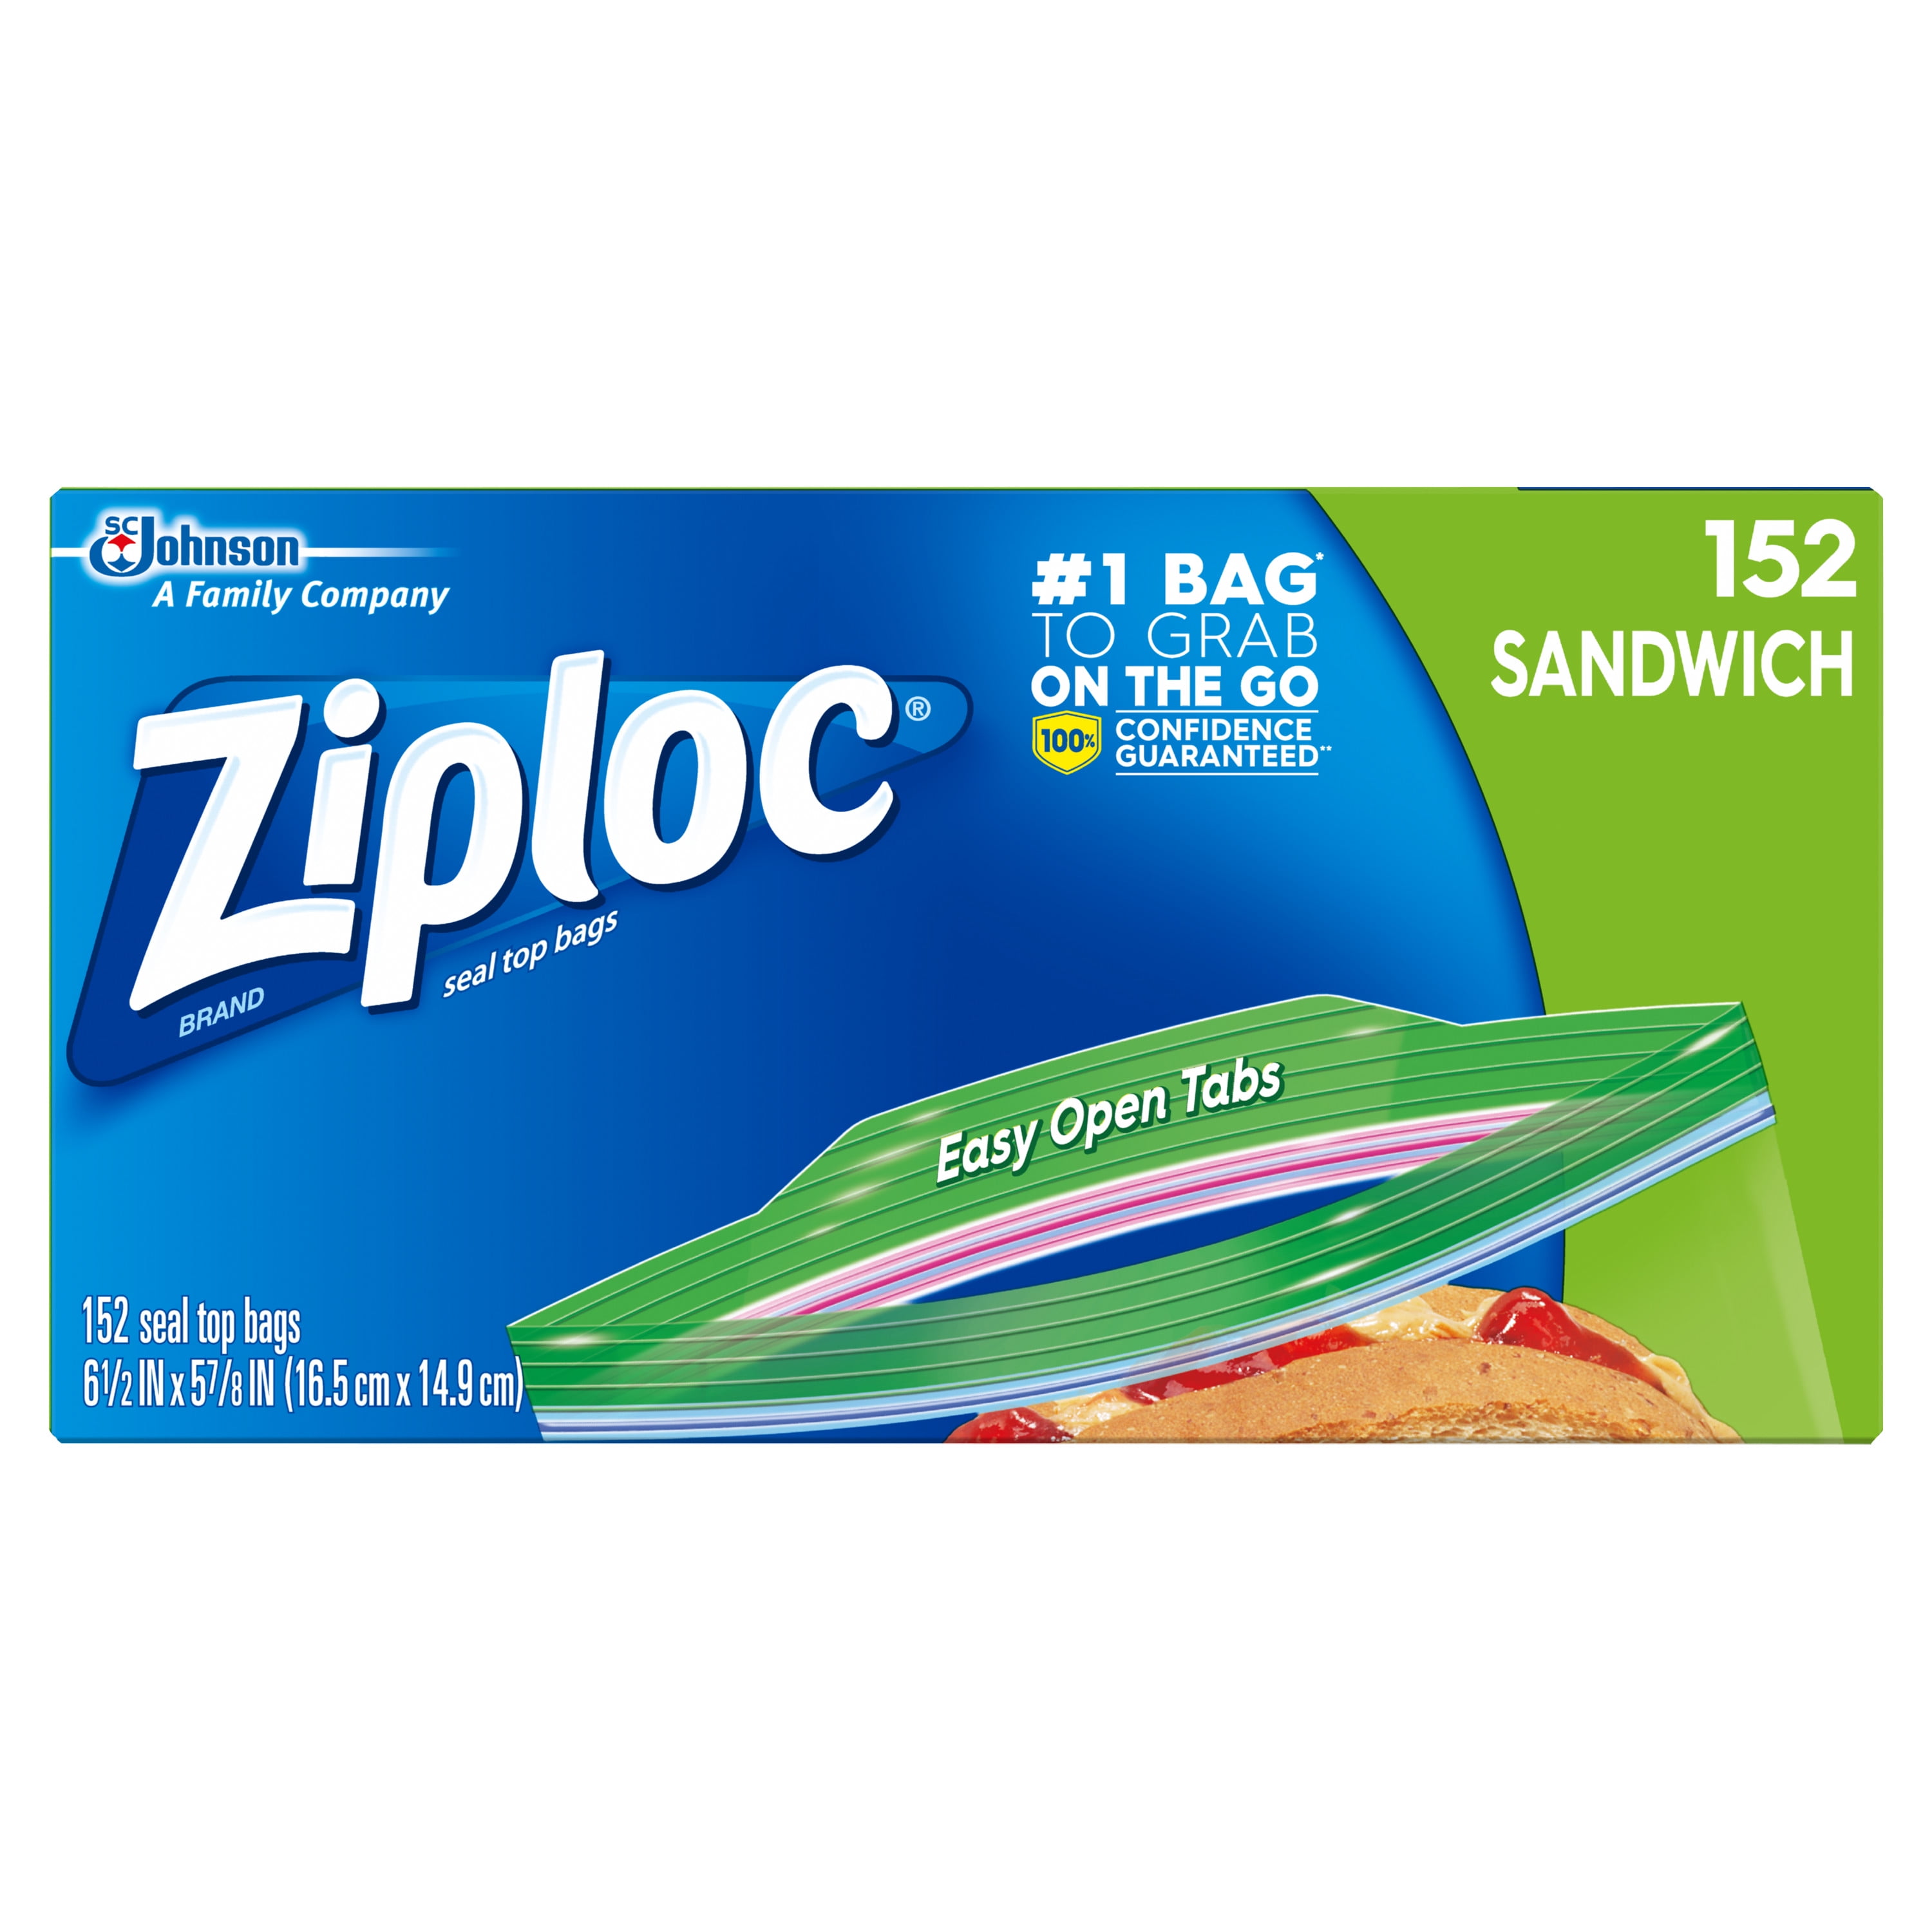 Johnson Gallon Ziploc Freezer Bags 00389 14-Count – Good's Store Online